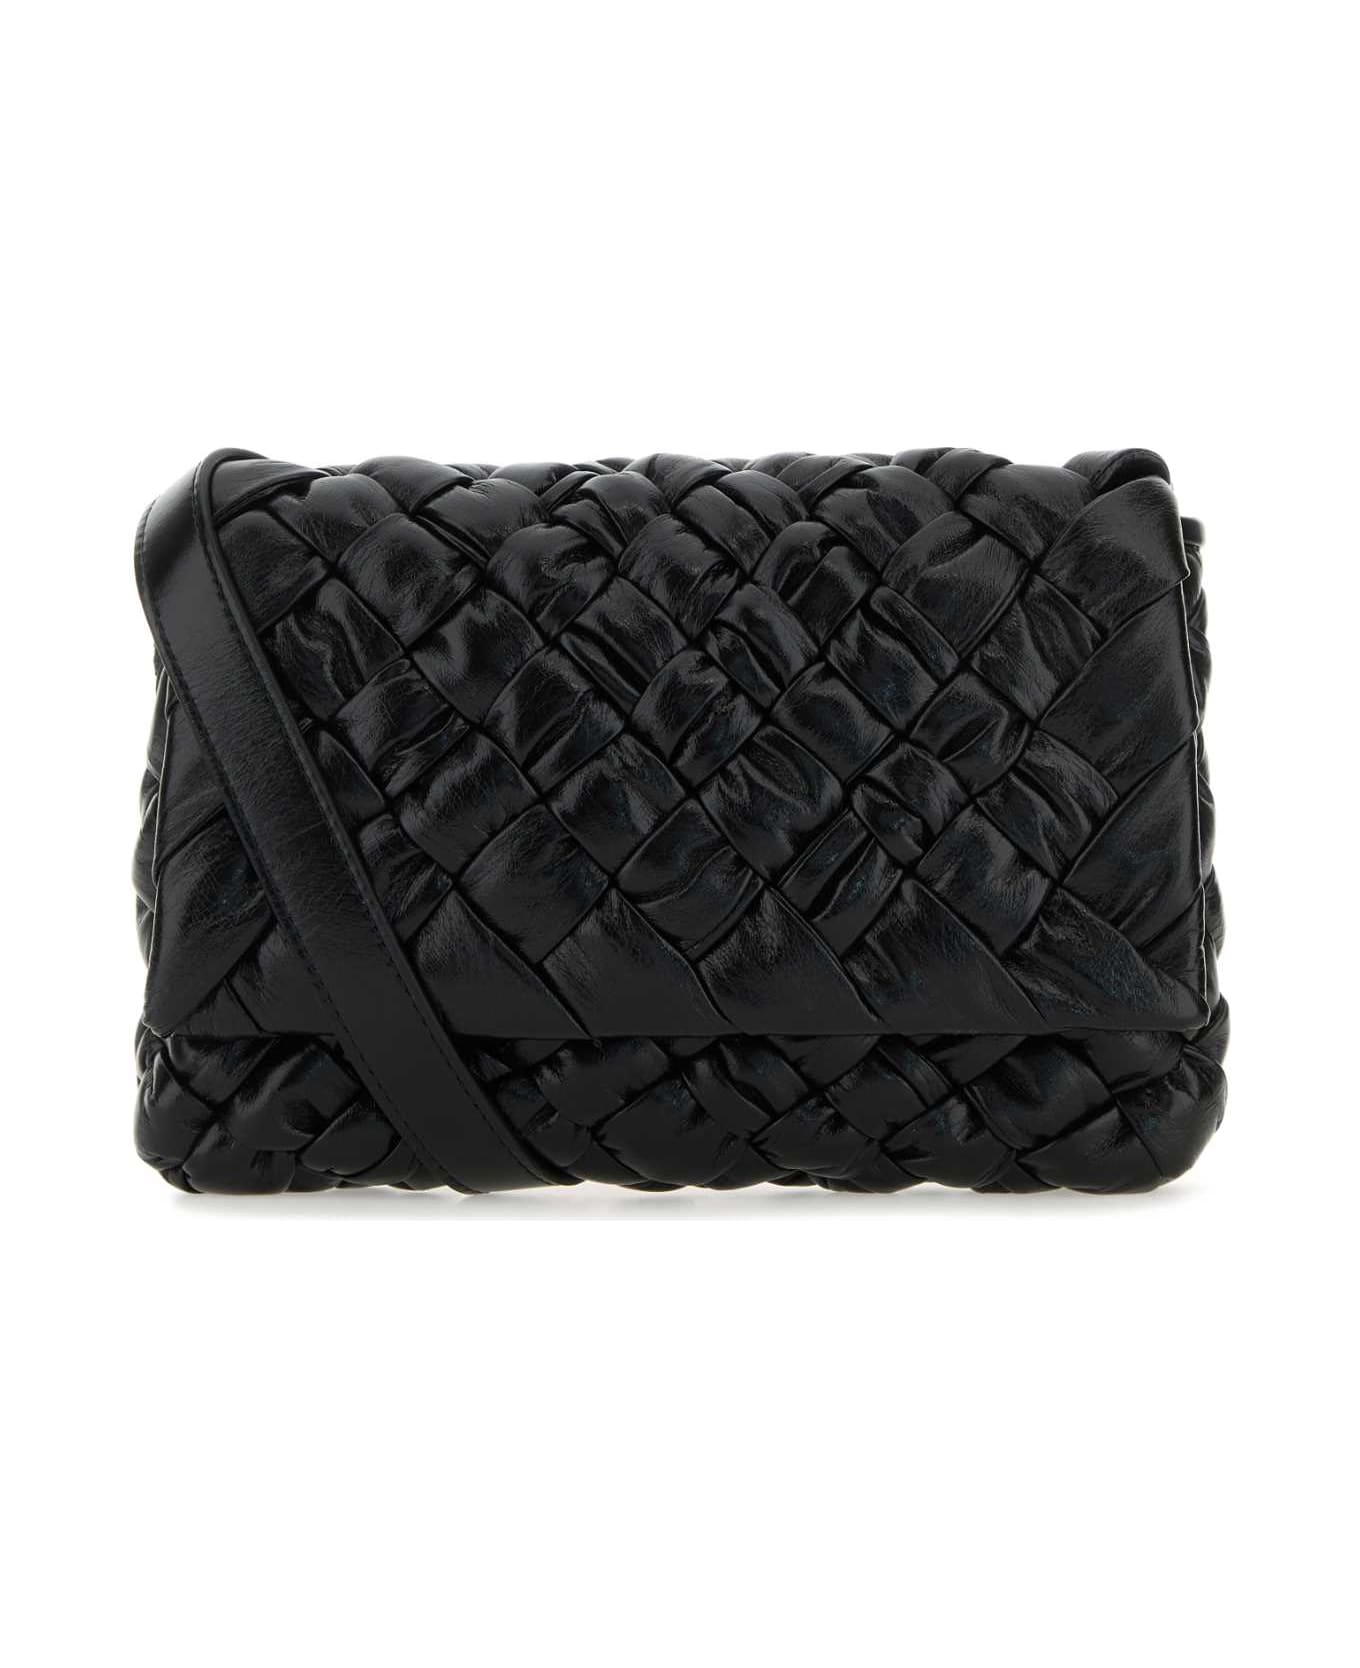 Bottega Veneta Black Leather Crossbody Bag - BLACKSILVER